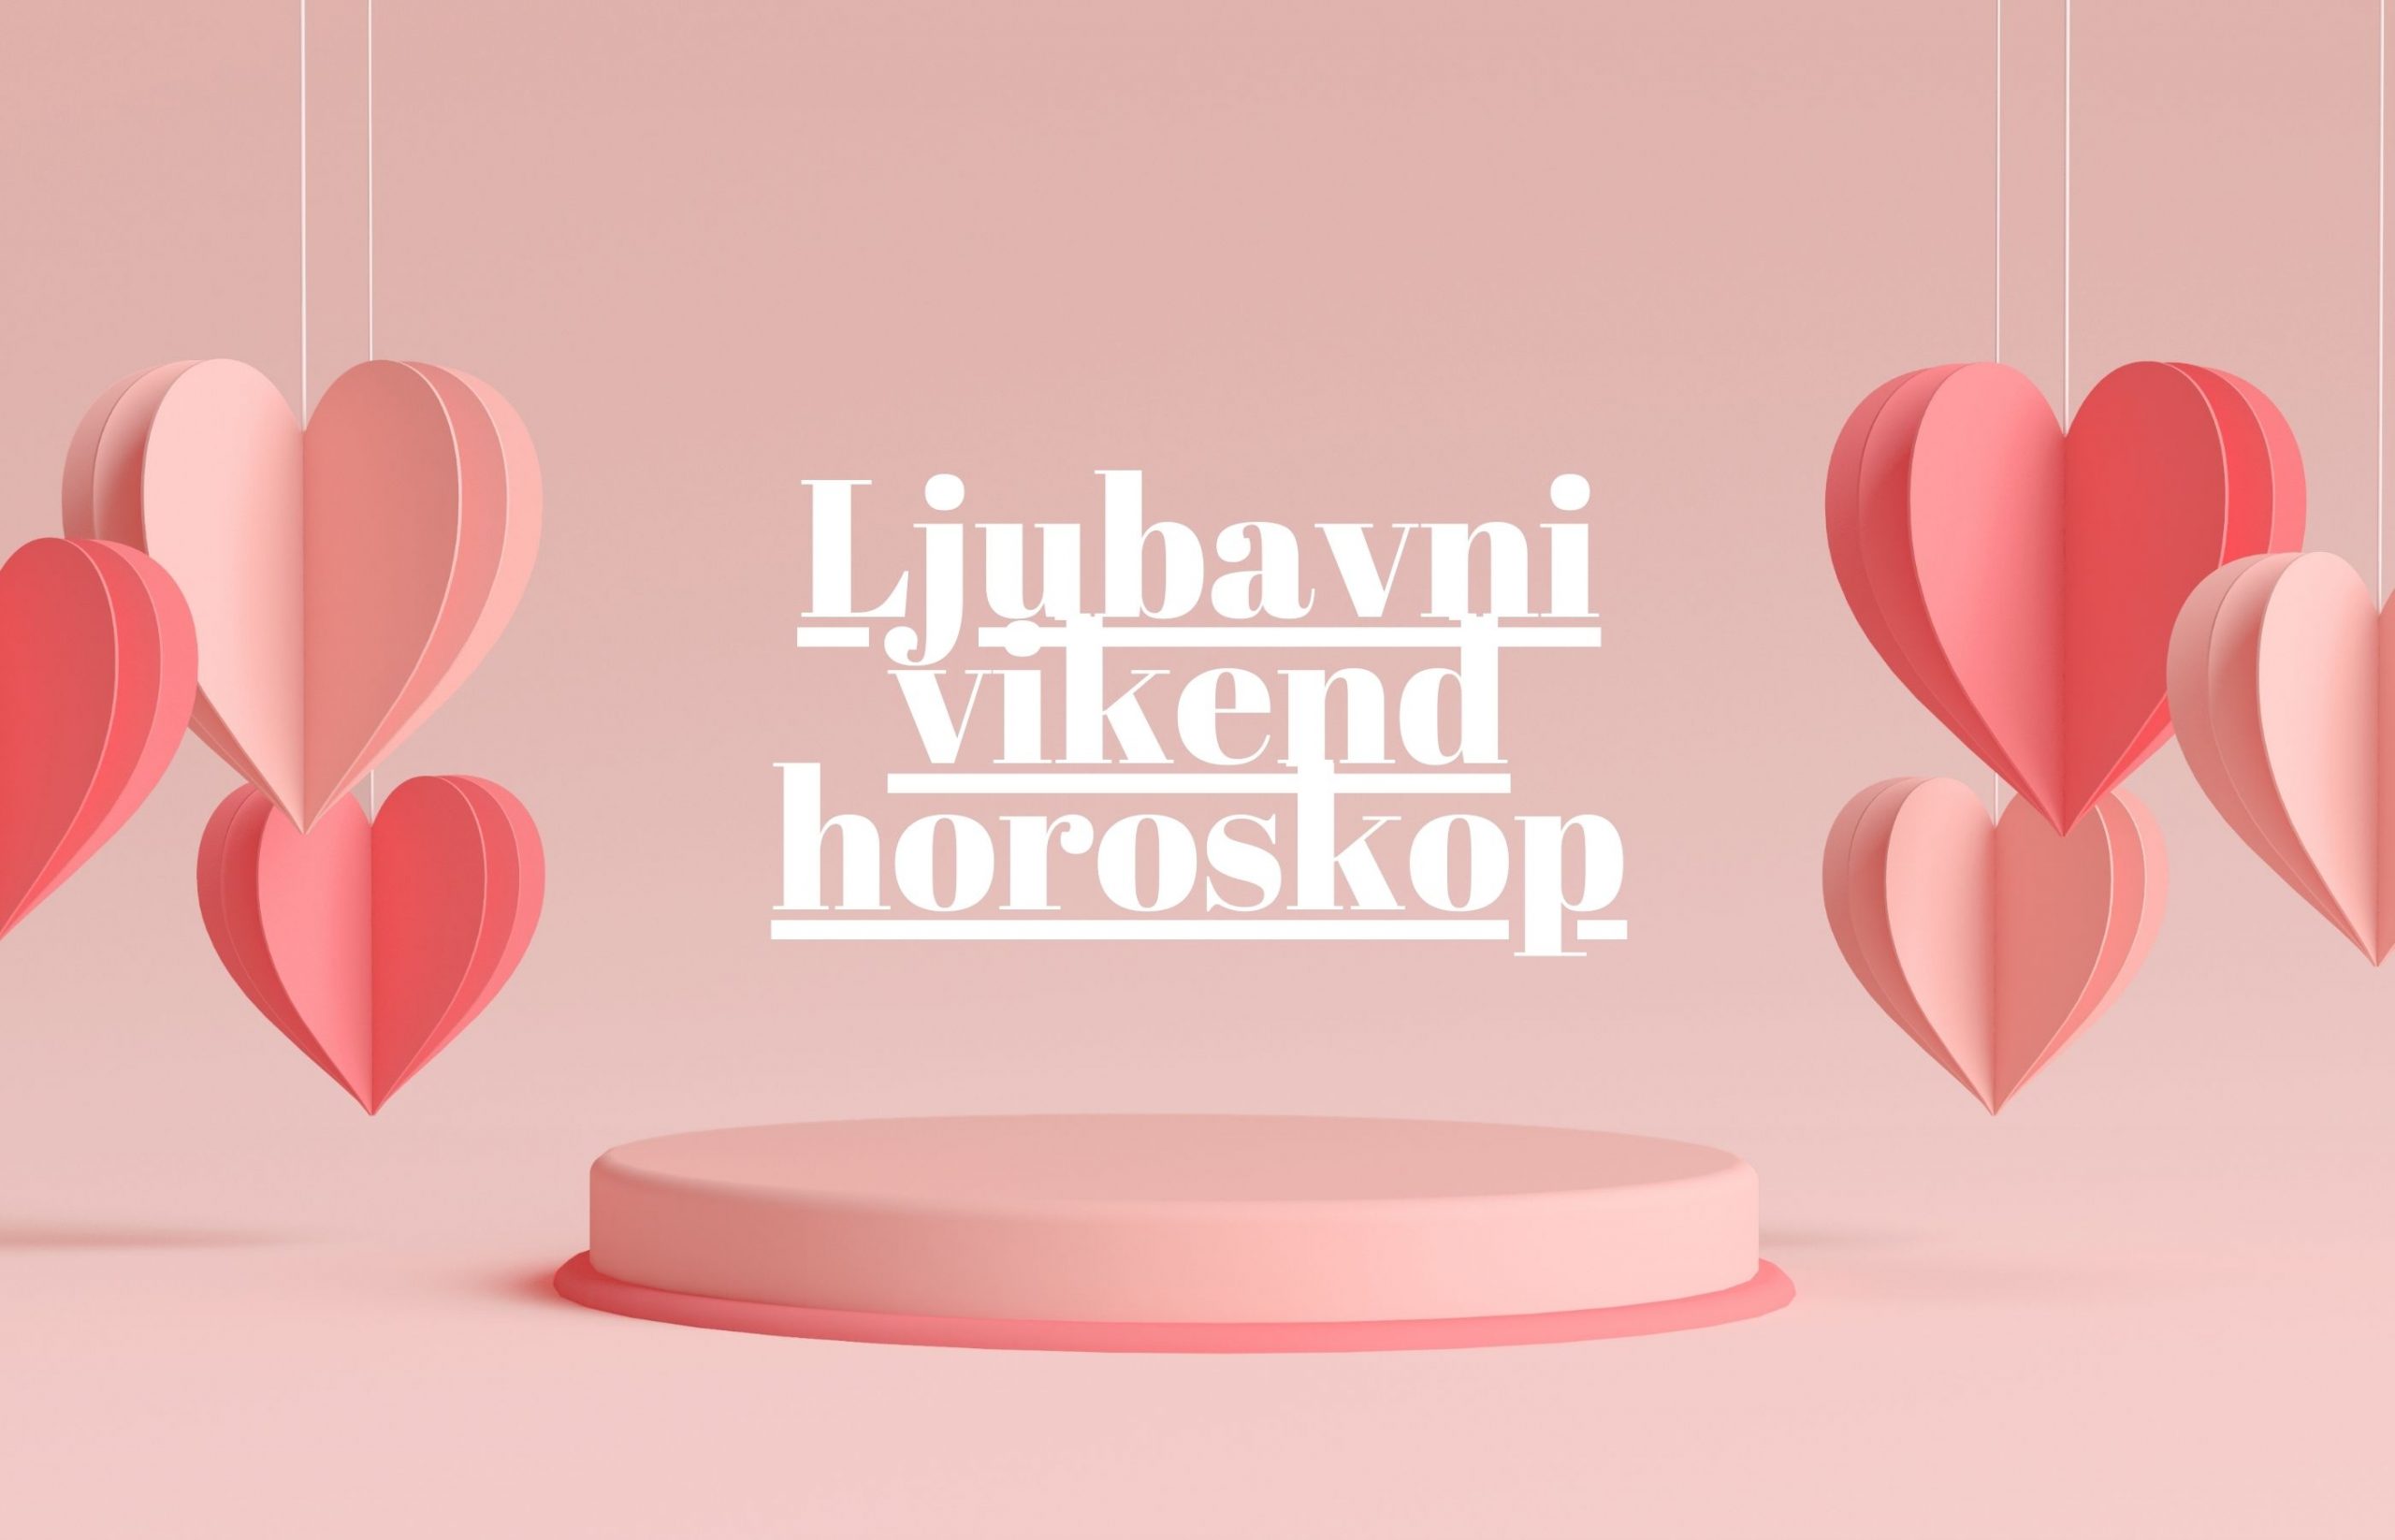 Ljubavni vikend horoskop za 3. i 4. oktobar